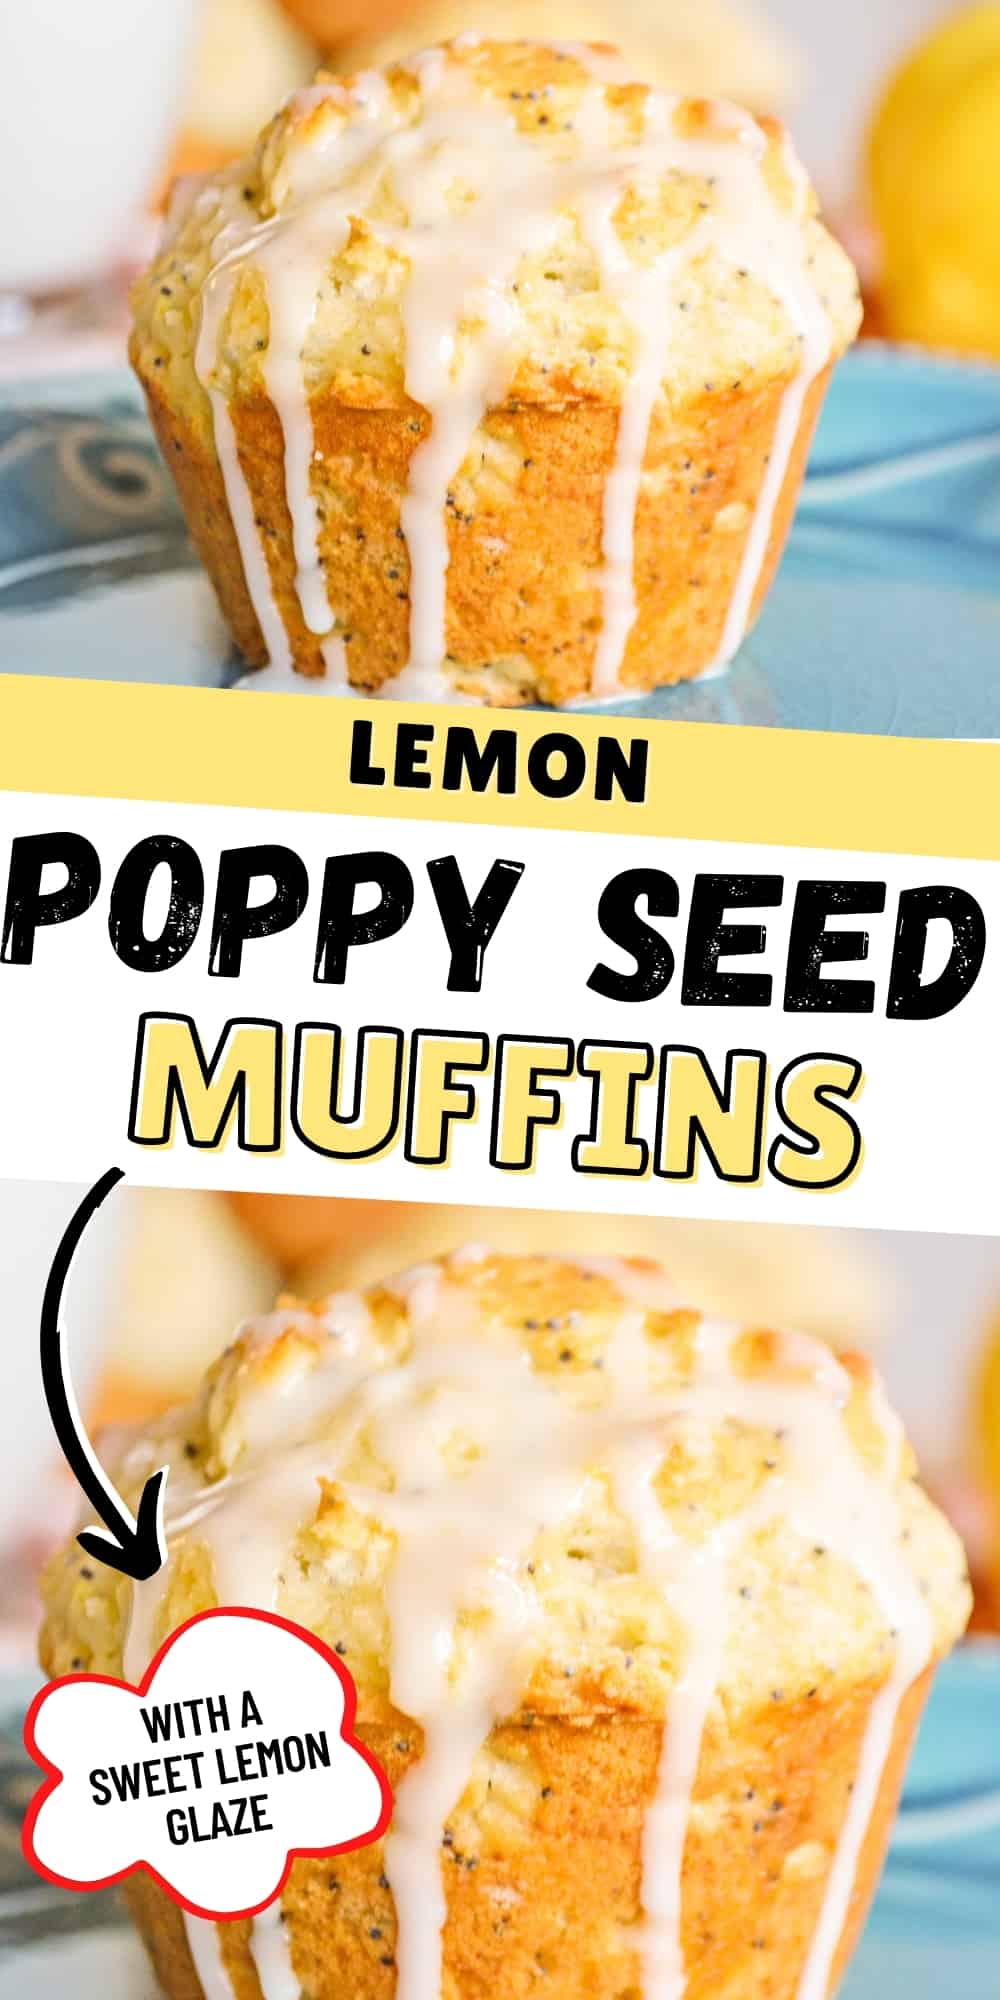 Lemon Poppy Seed Muffins with Sweet Lemon Glaze